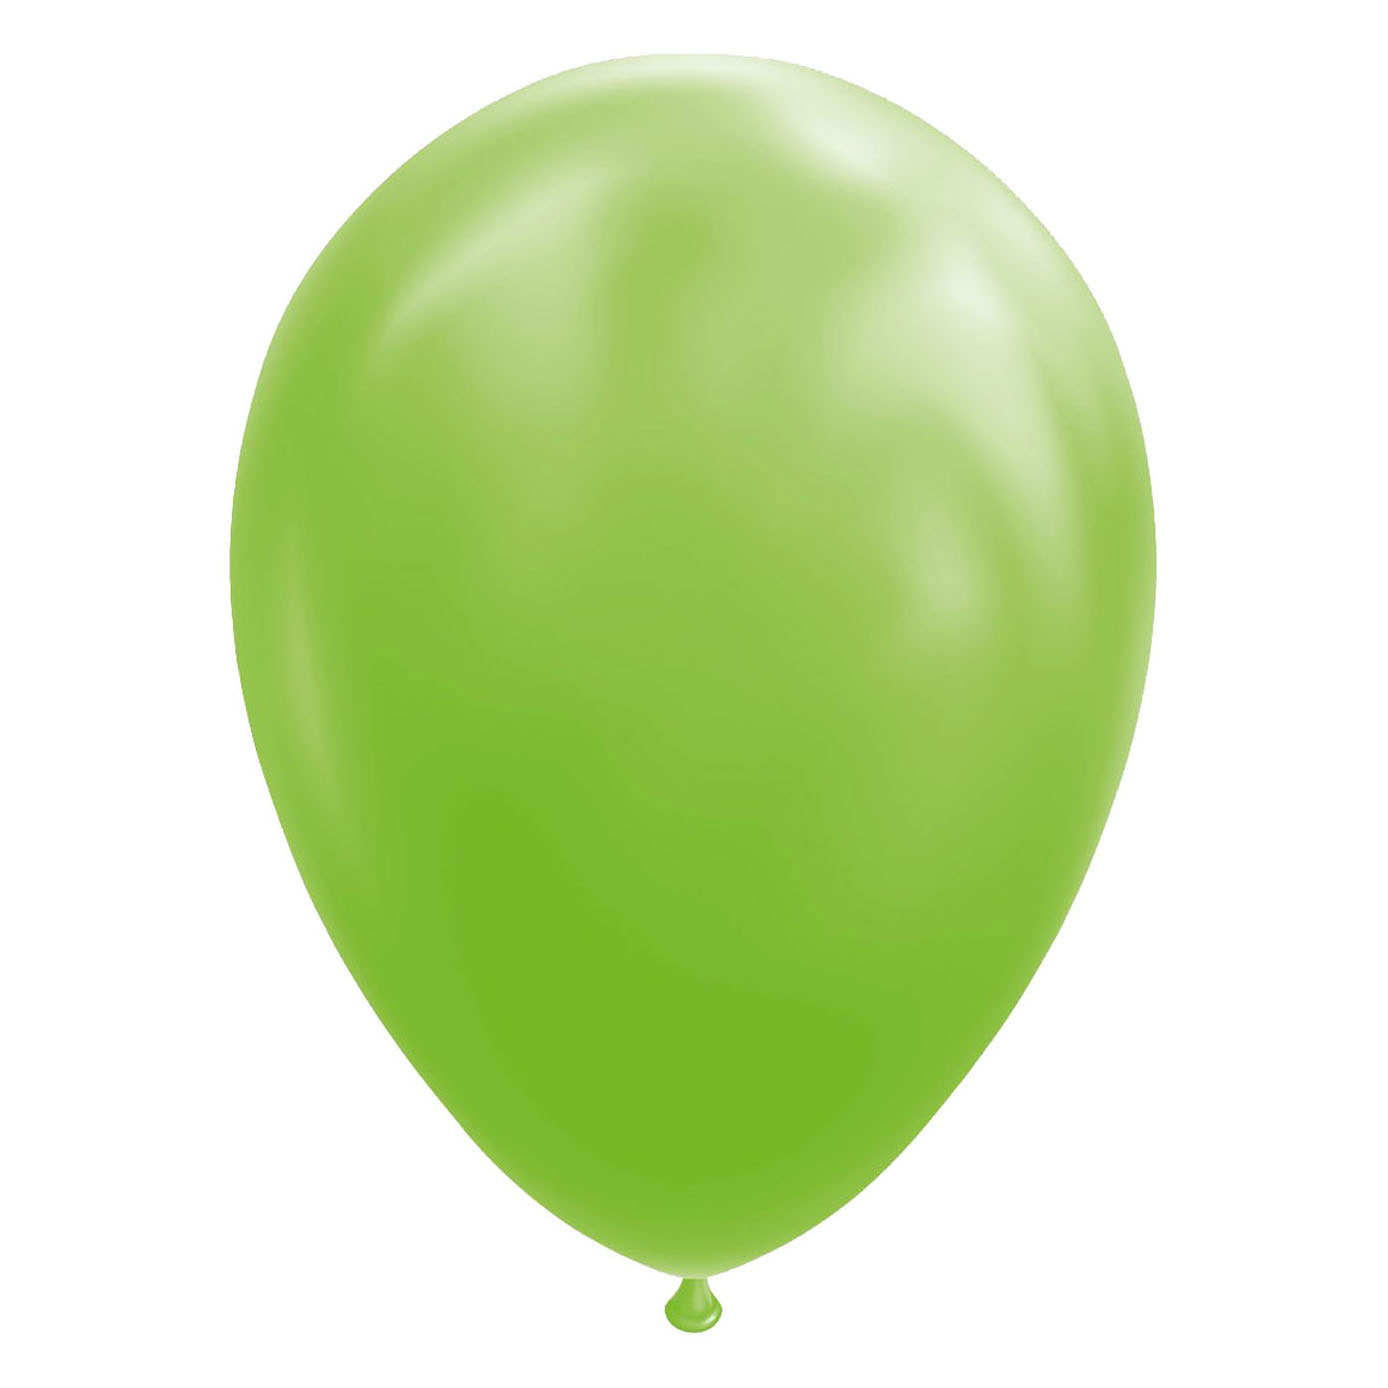 Ballons Vert Citron, 30cm, 10pcs.